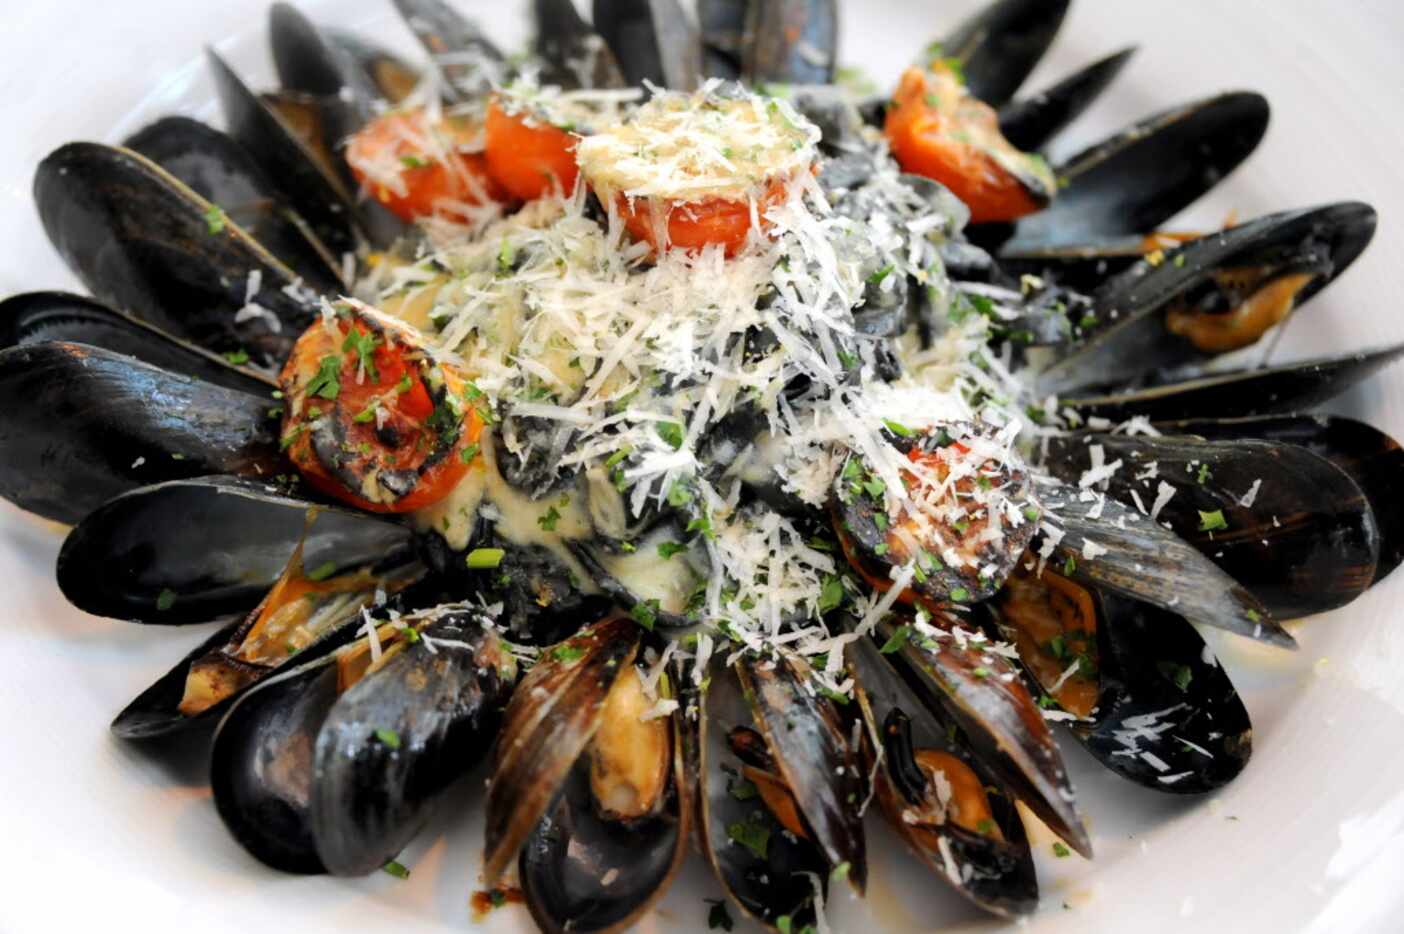 The linguini nero features PEI mussles, shallot, garlic, red chili flake, white wine sauce...